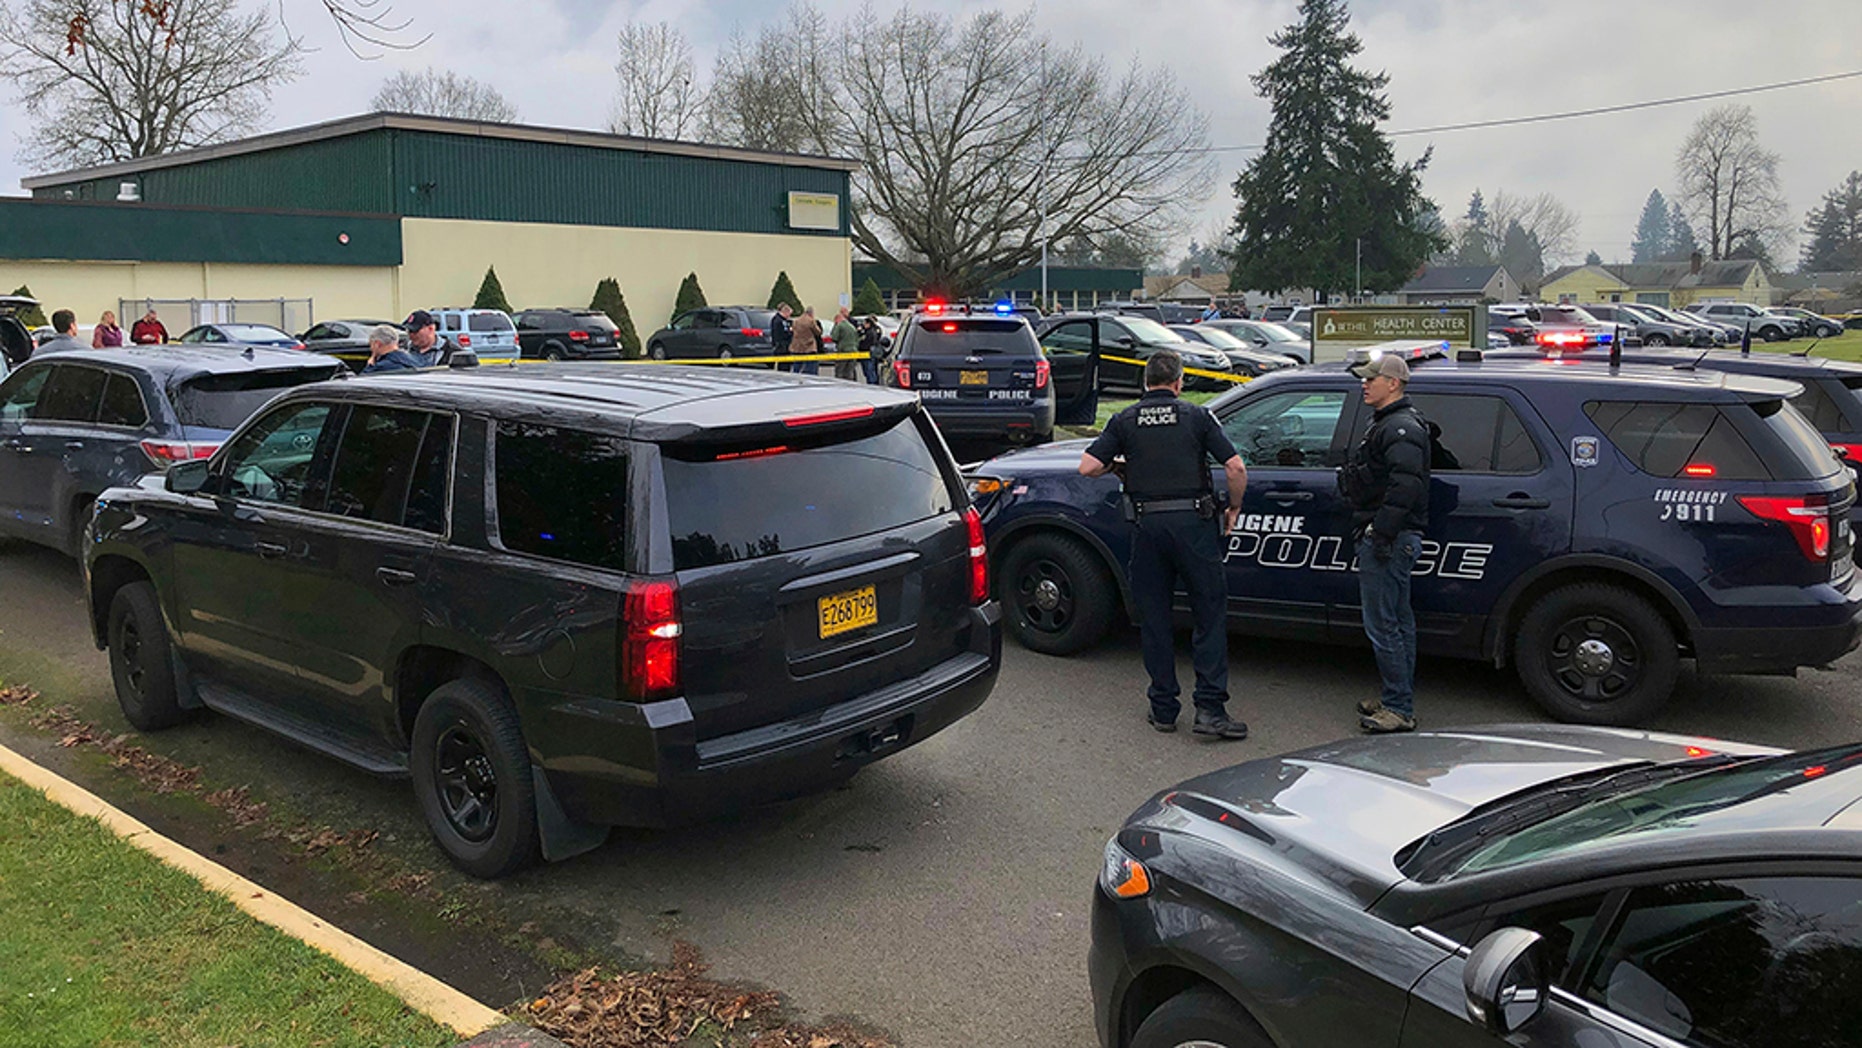 Custody dispute leaves one person dead at Oregon School, police say